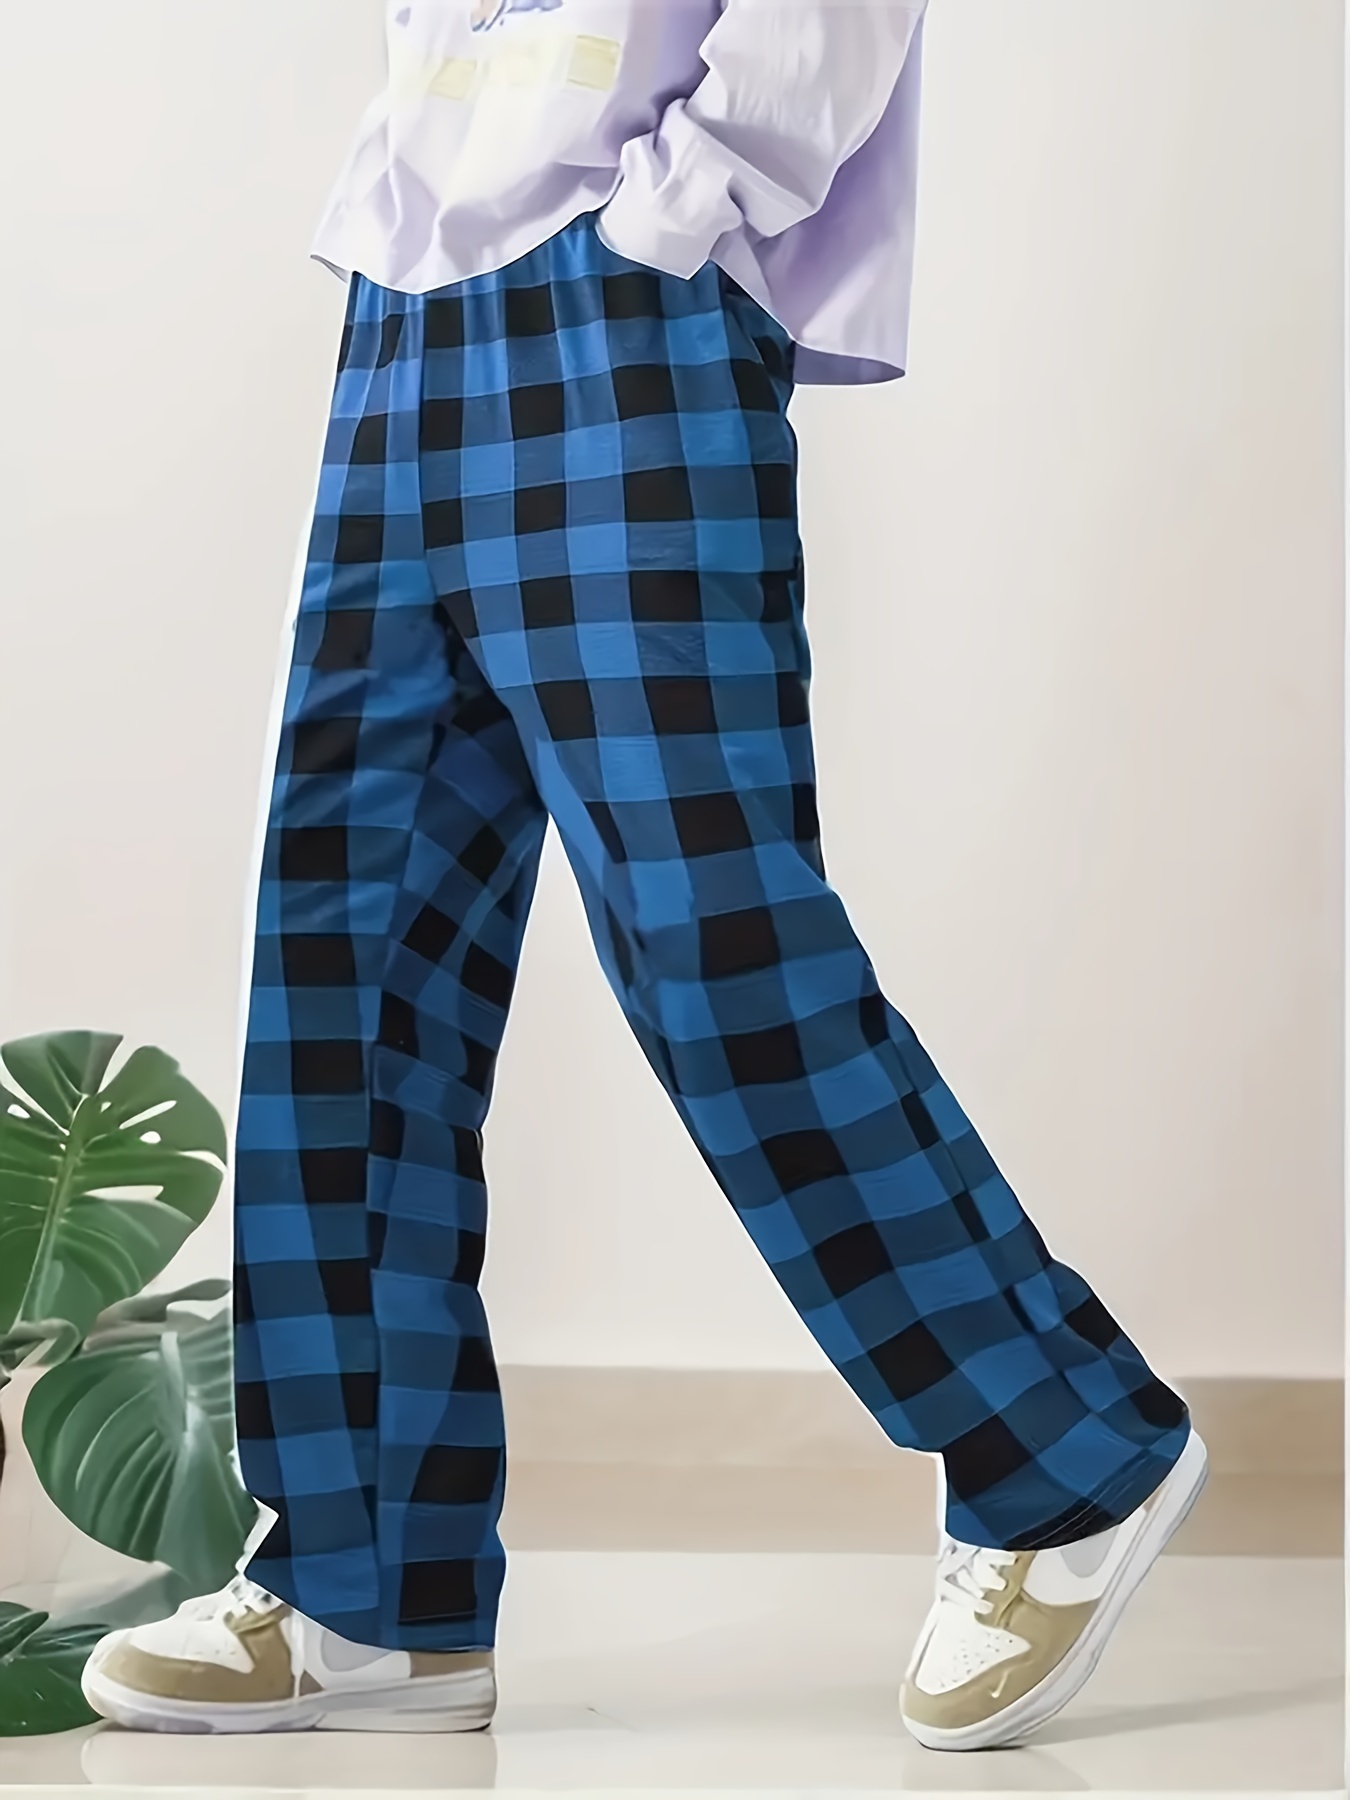 Blue Plaid Pajama Pants Mens, Mens Plaid Sleepwear Pants